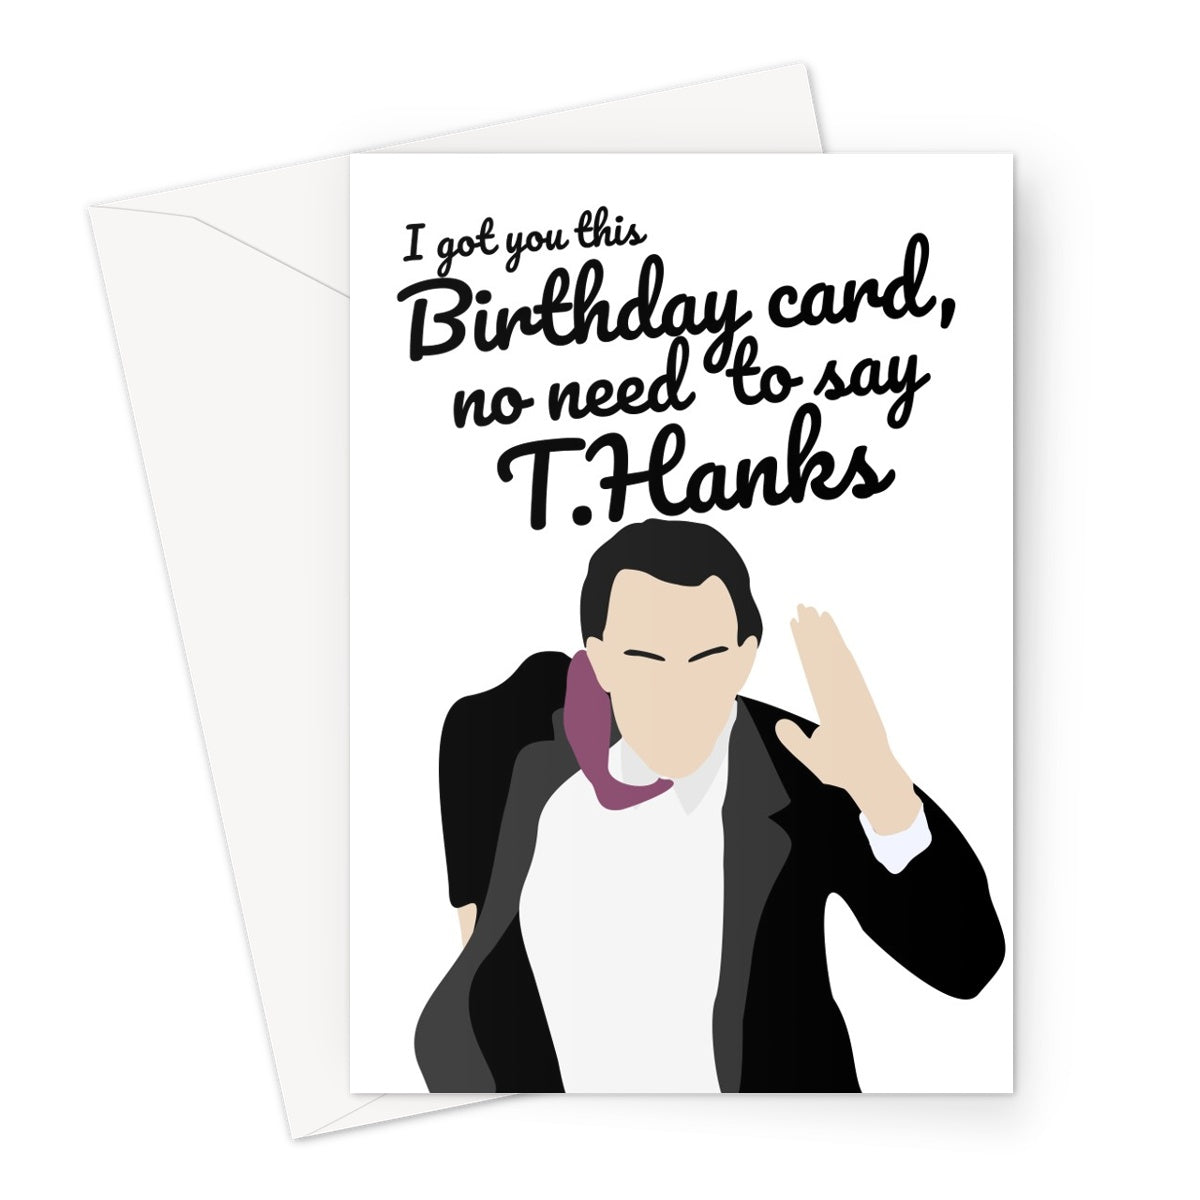 Birthday Card No Need To Say Thanks Tom Hanks Fan Greeting Card